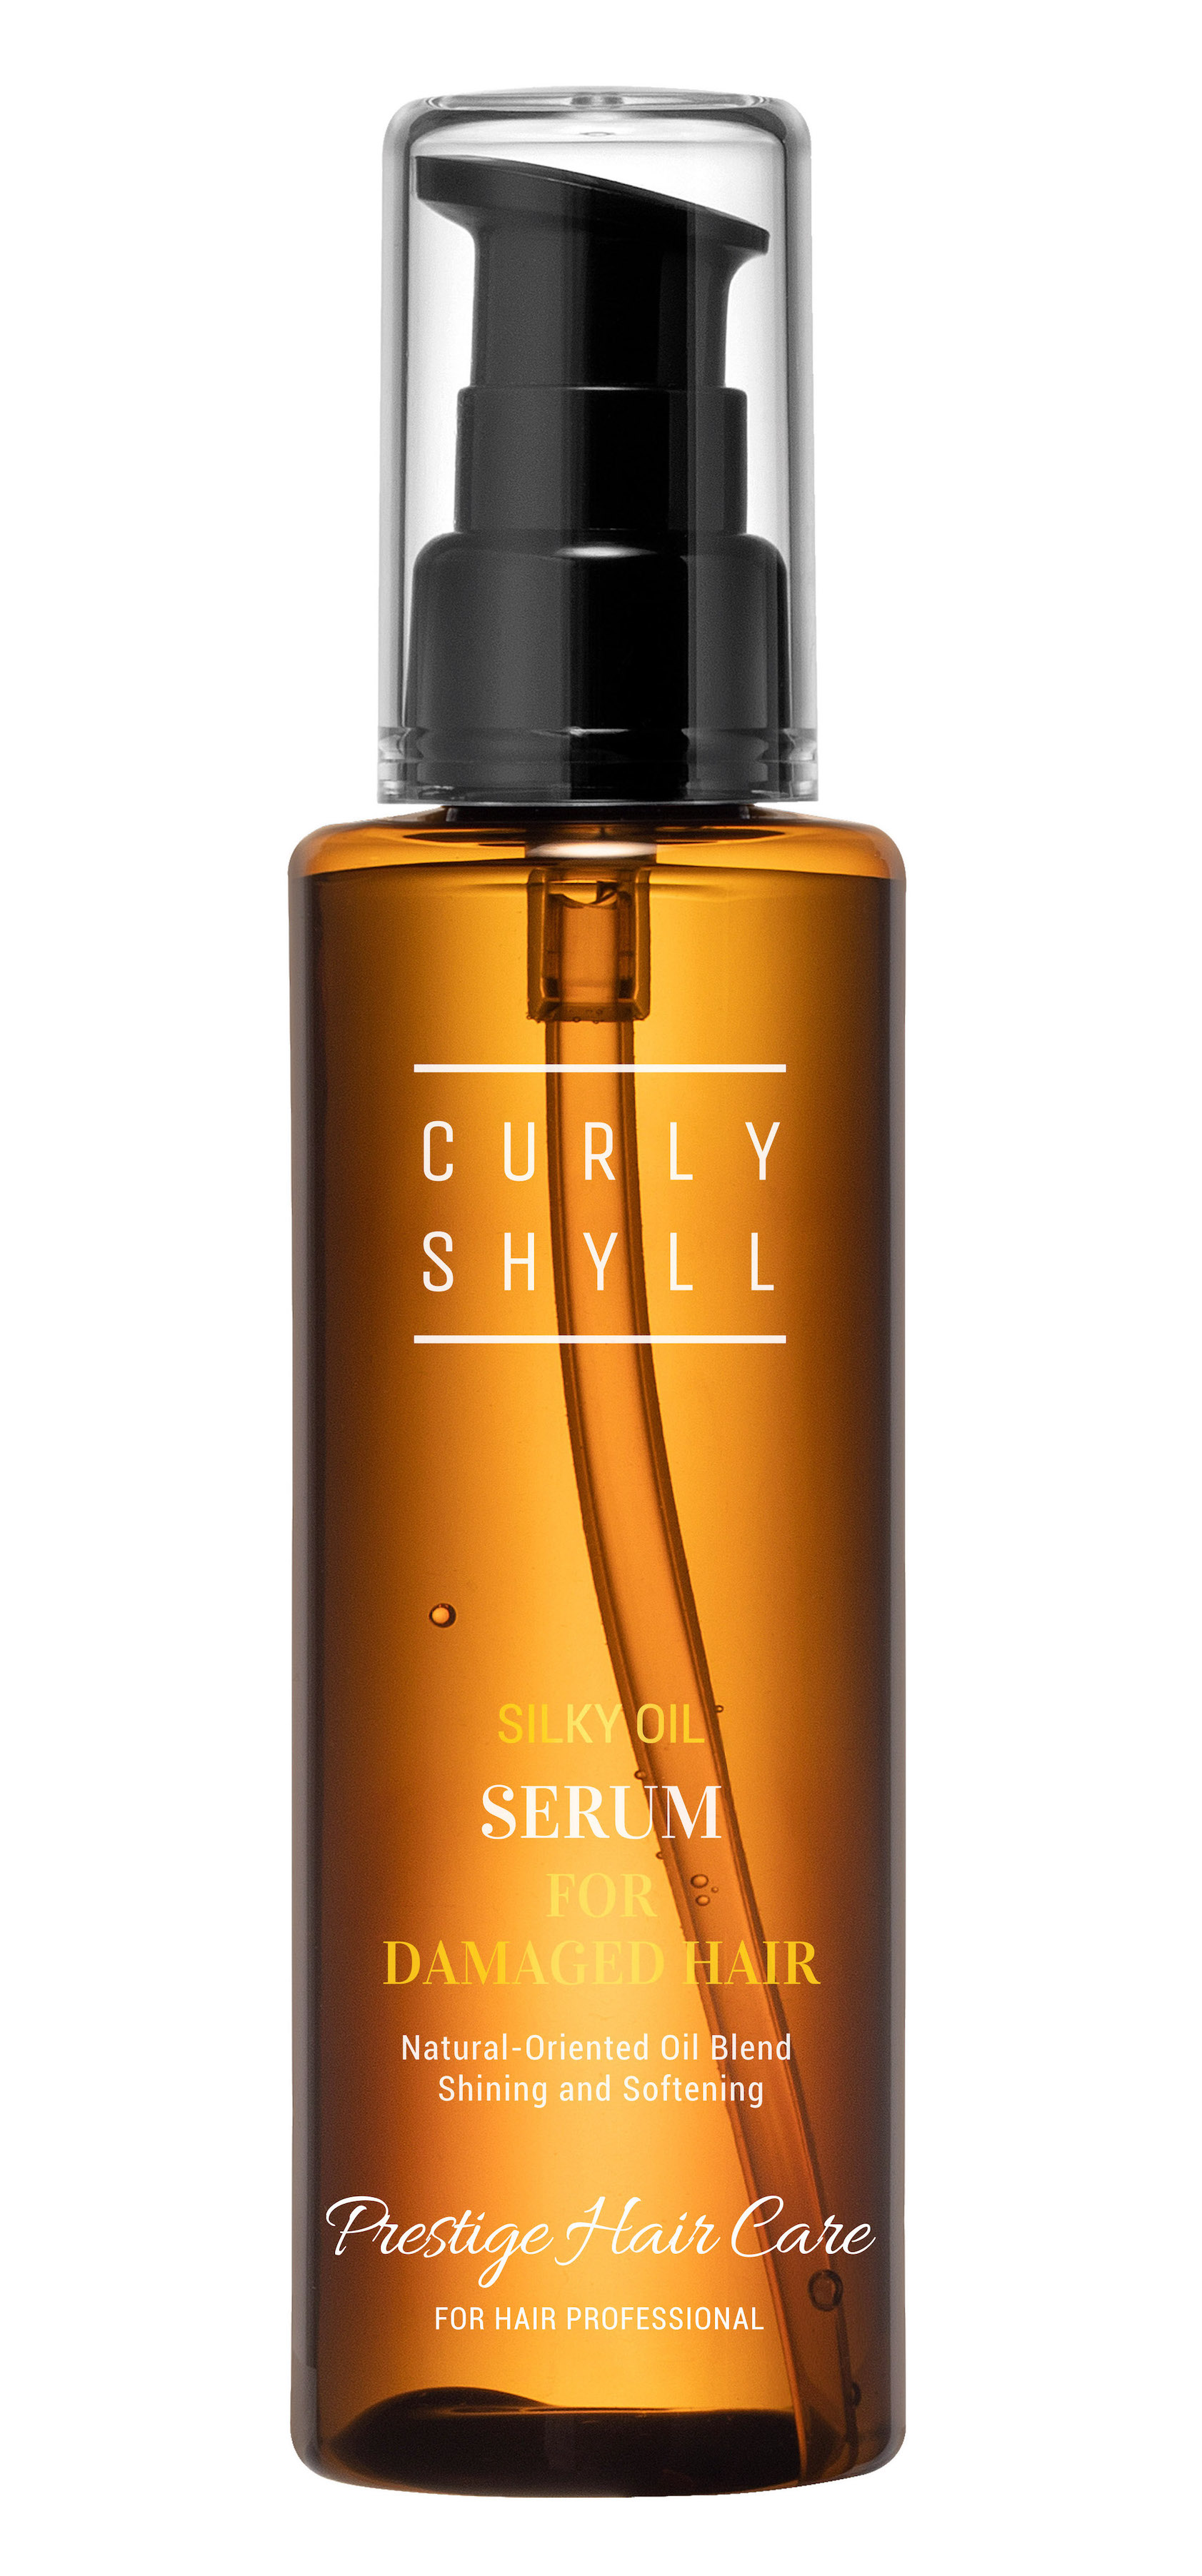 Curly Shyll - Сыворотка для поврежденных волос Silky Oil Serum - Фото 1